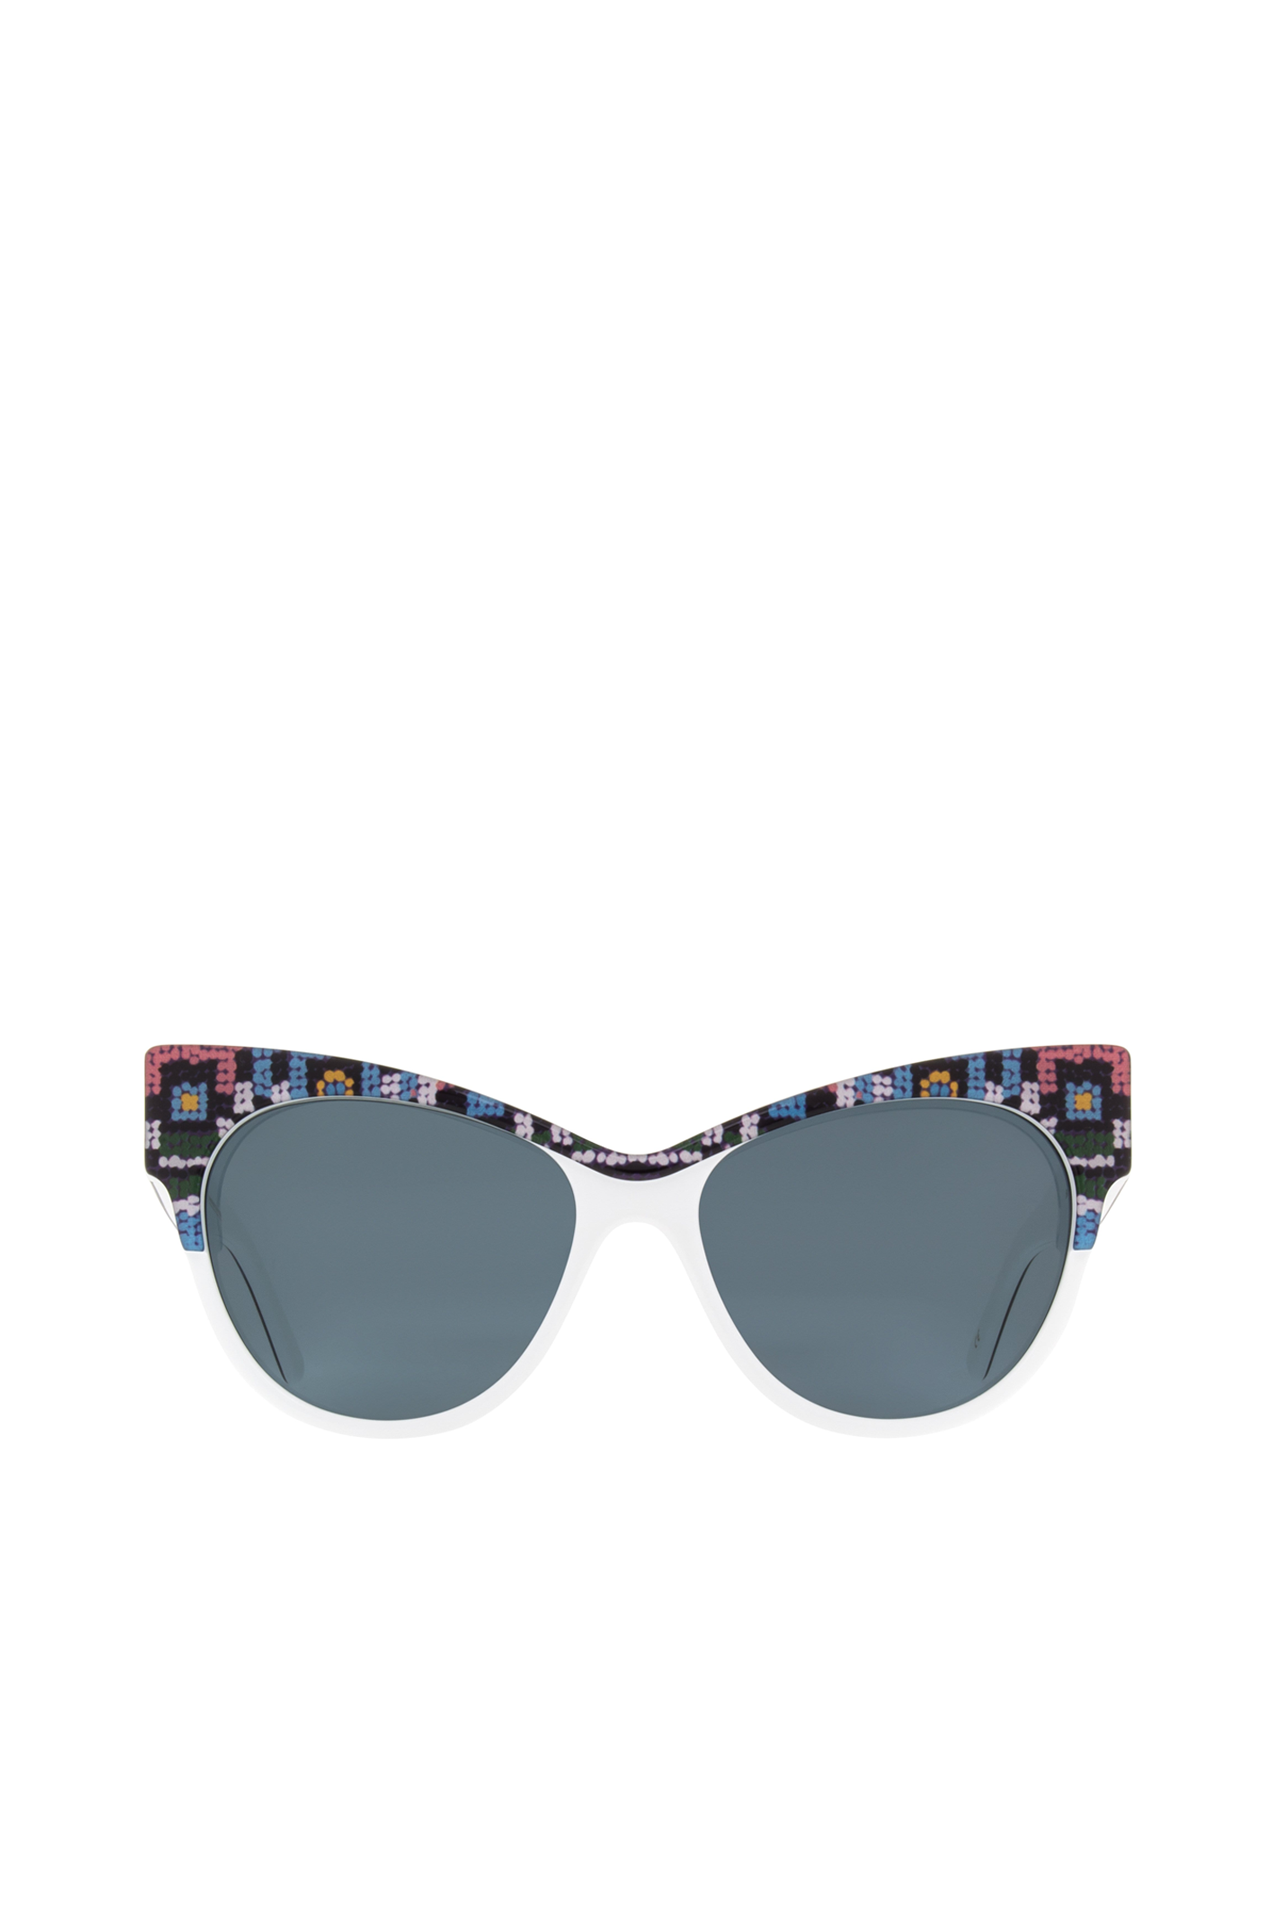 Sunglasses Bolero - Pixi Blue